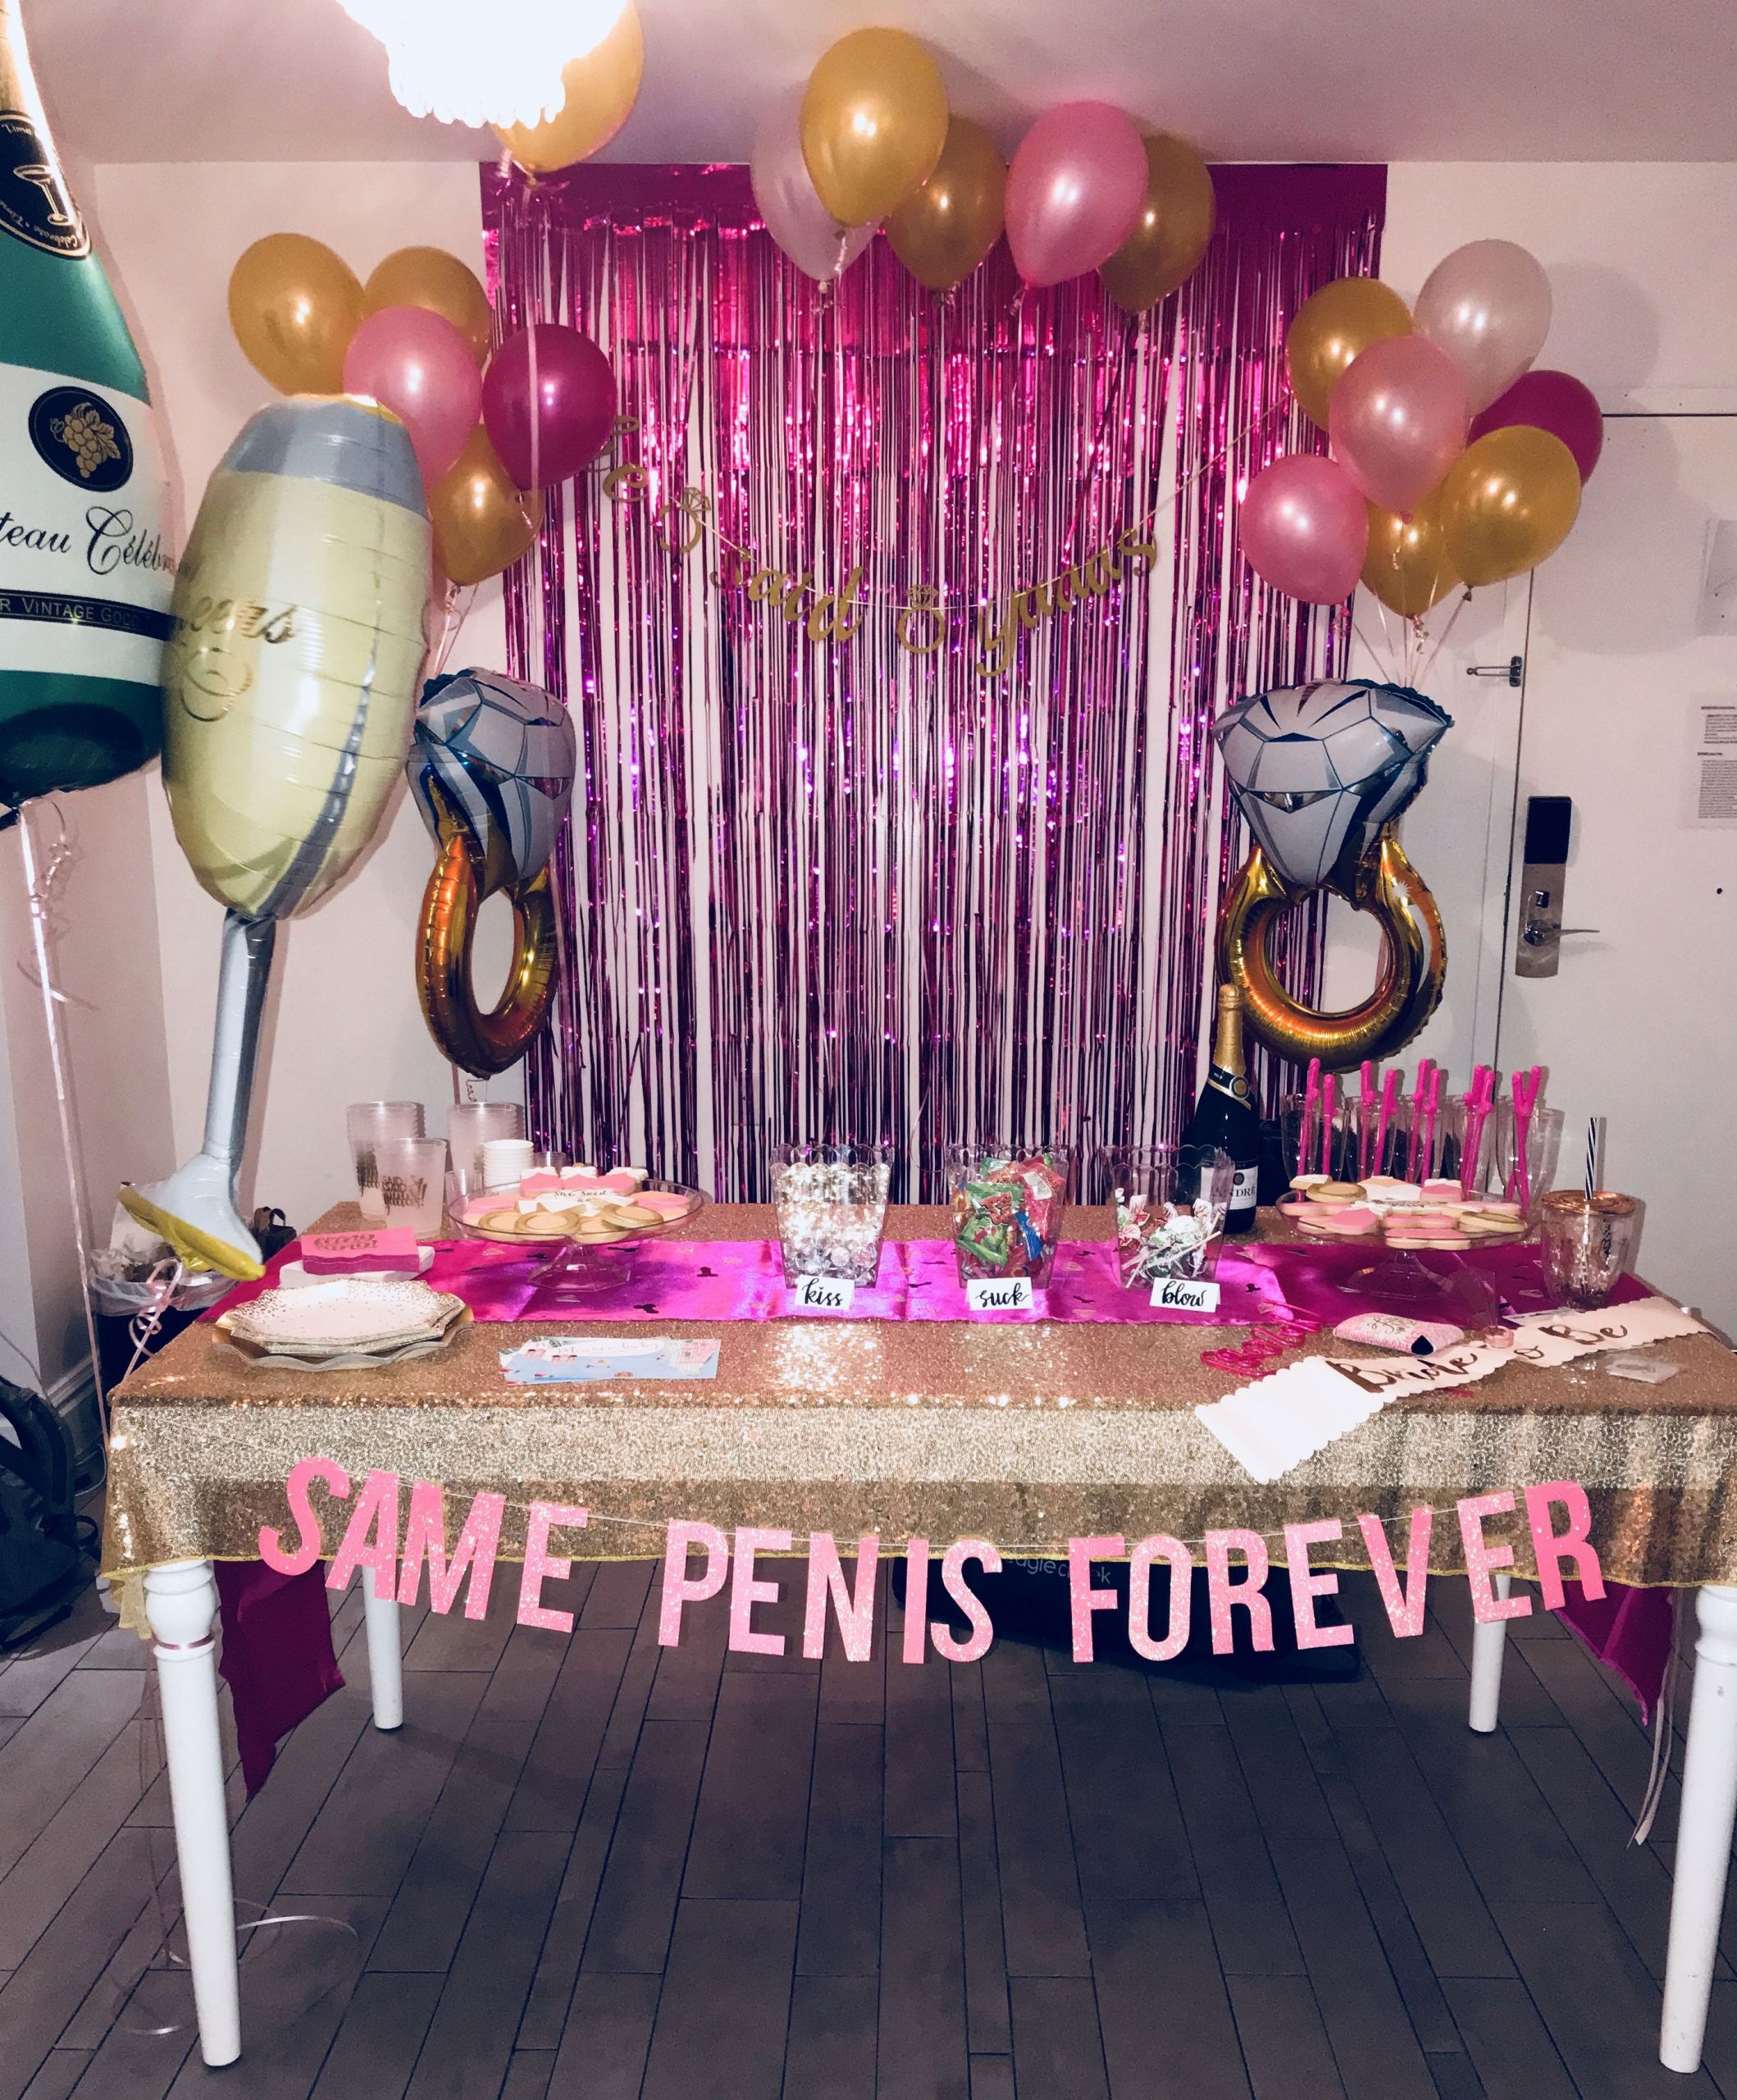 Combo Bachelor Bachelorette Party Ideas
 Bachelorette party setup Gold and pink theme